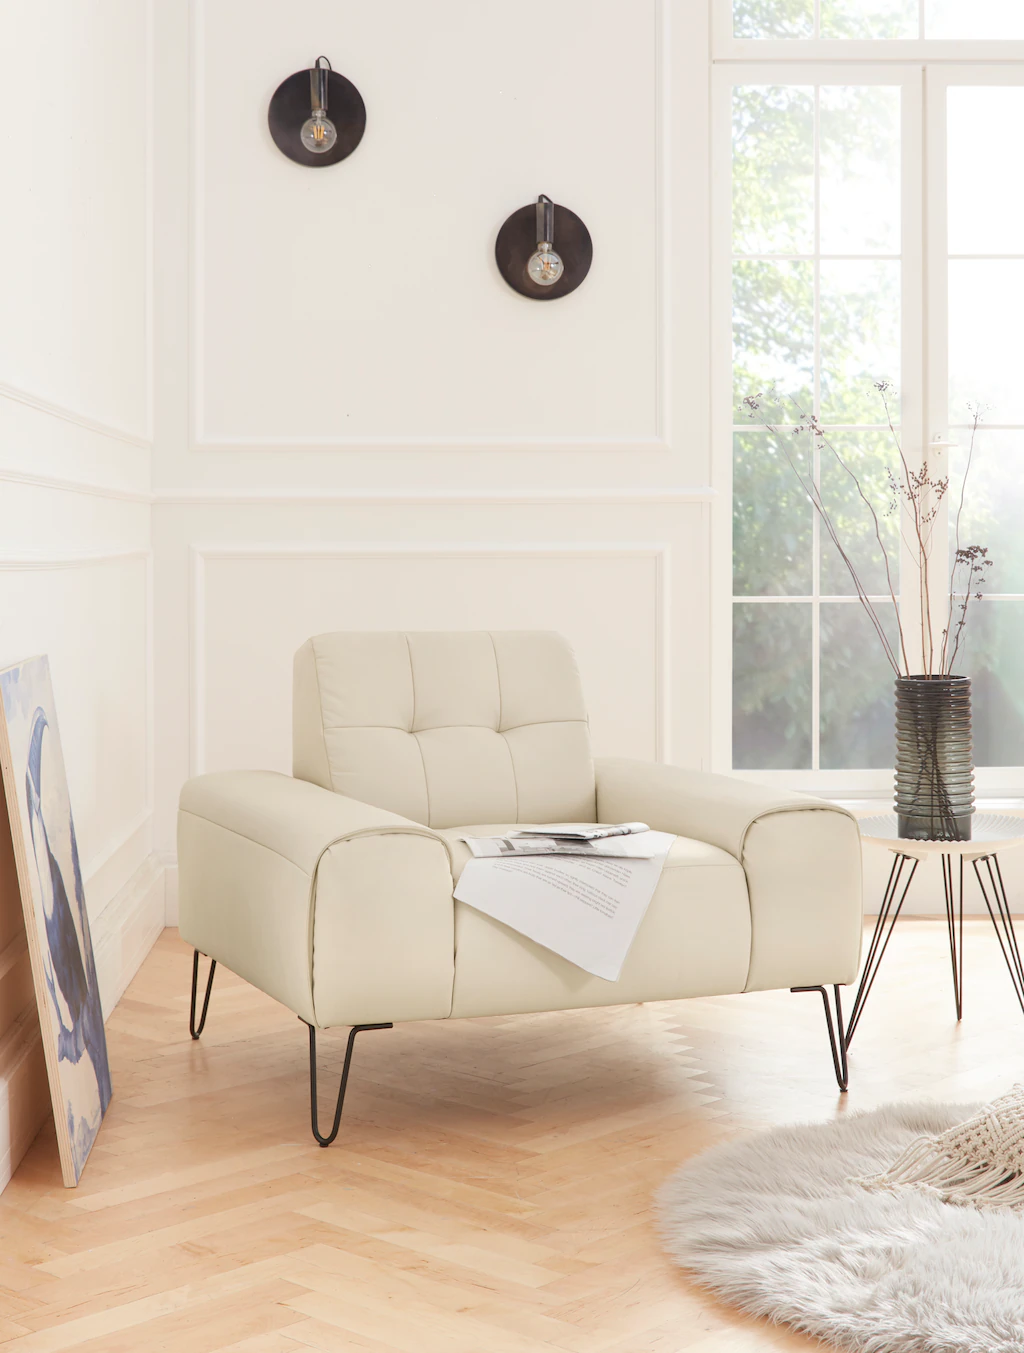 exxpo - sofa fashion Sessel "Taranto, Loungesessel" günstig online kaufen